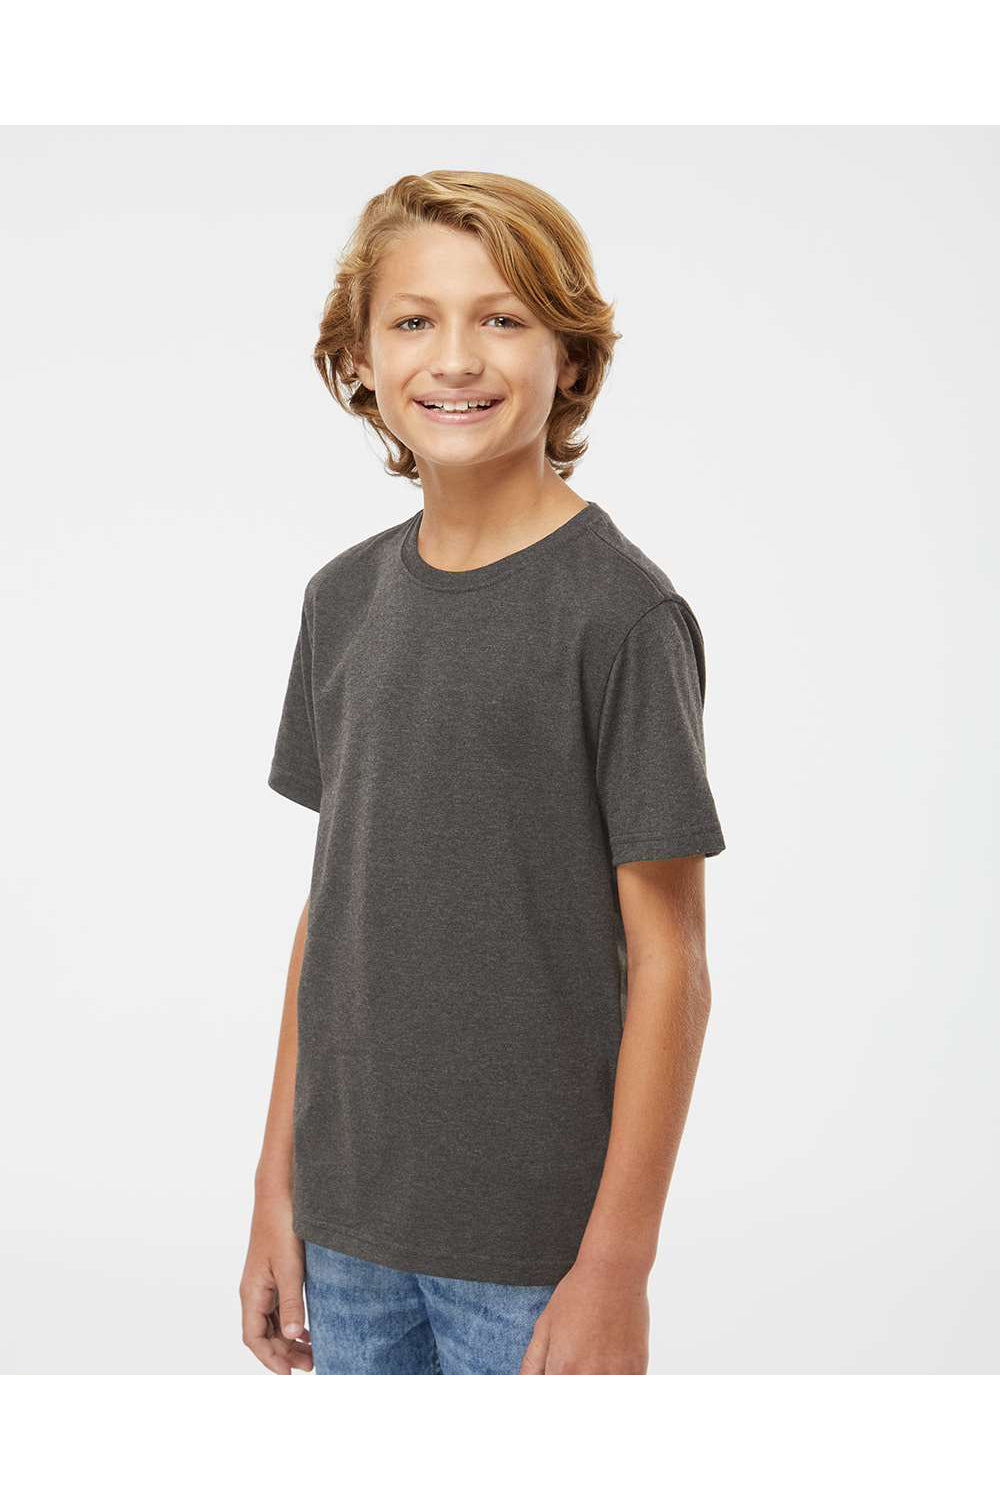 Kastlfel 2015 Youth RecycledSoft Short Sleeve Crewneck T-Shirt Carbon Grey Model Side